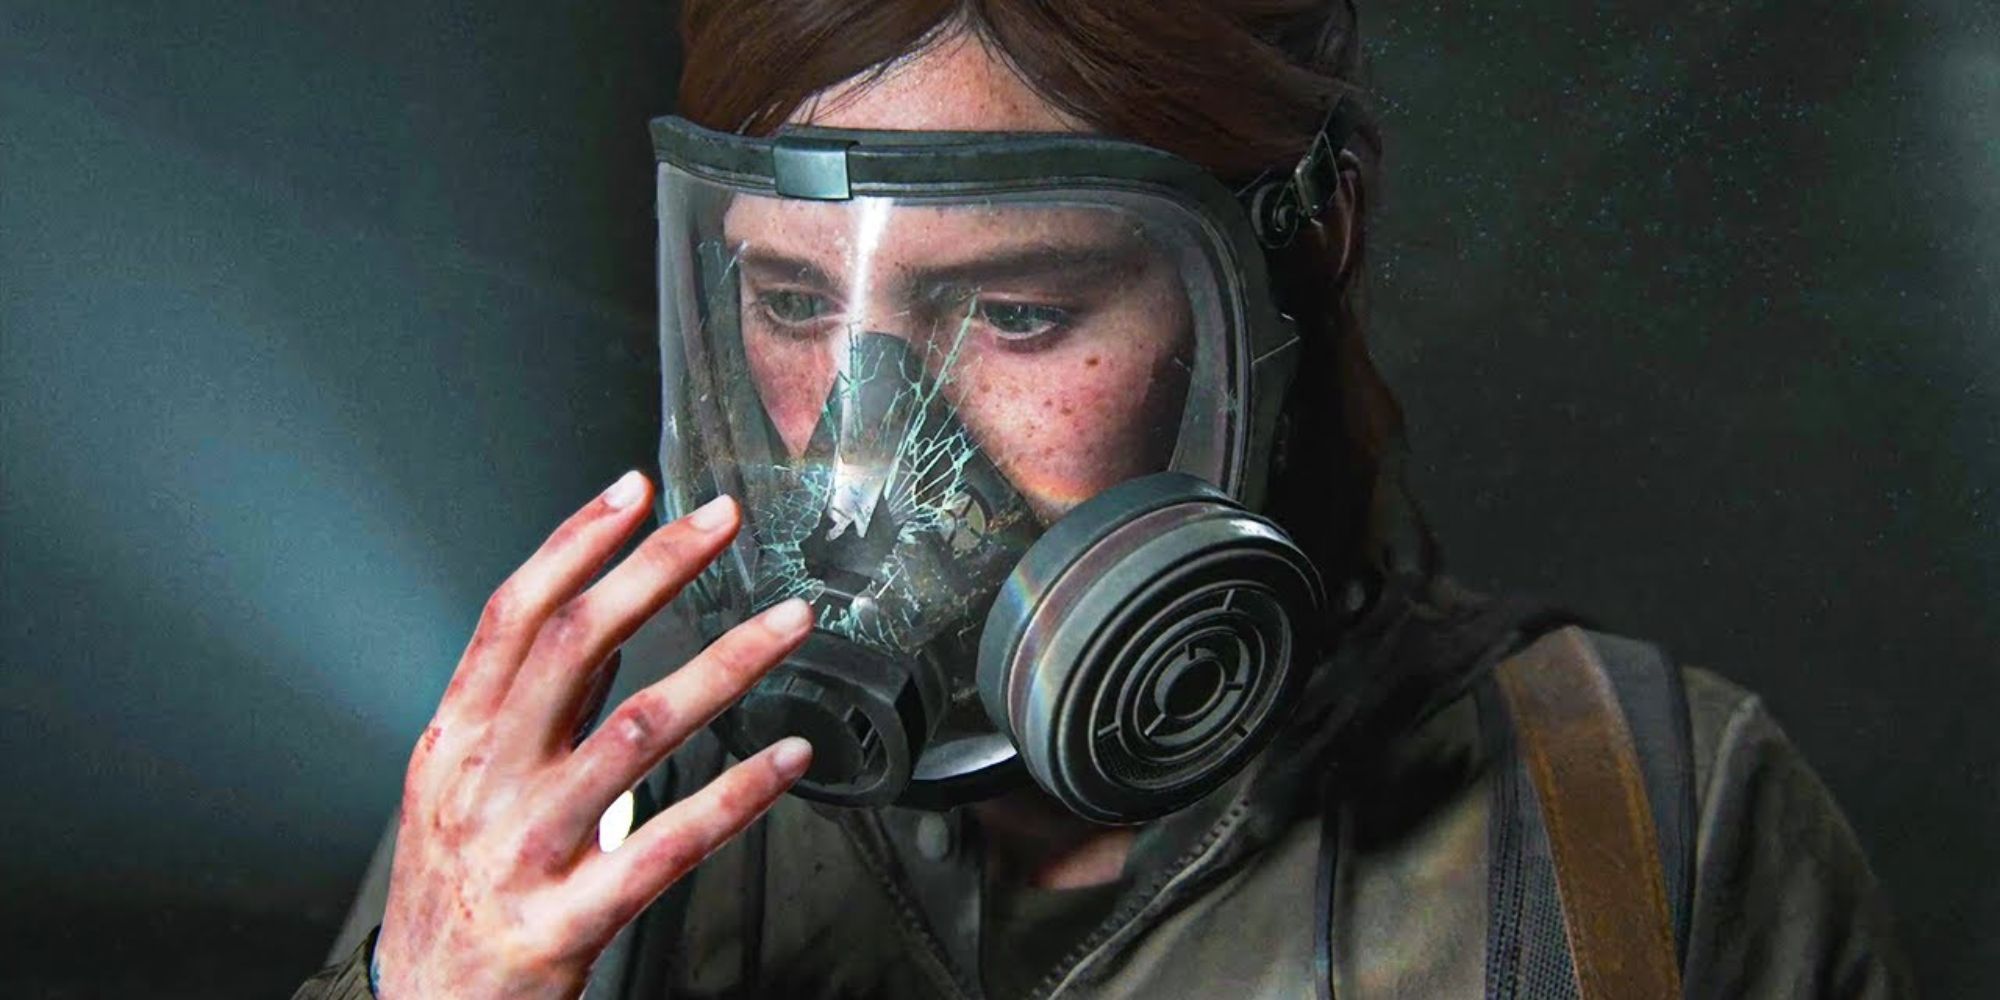 Why is Ellie immune in 'The Last Of Us'?